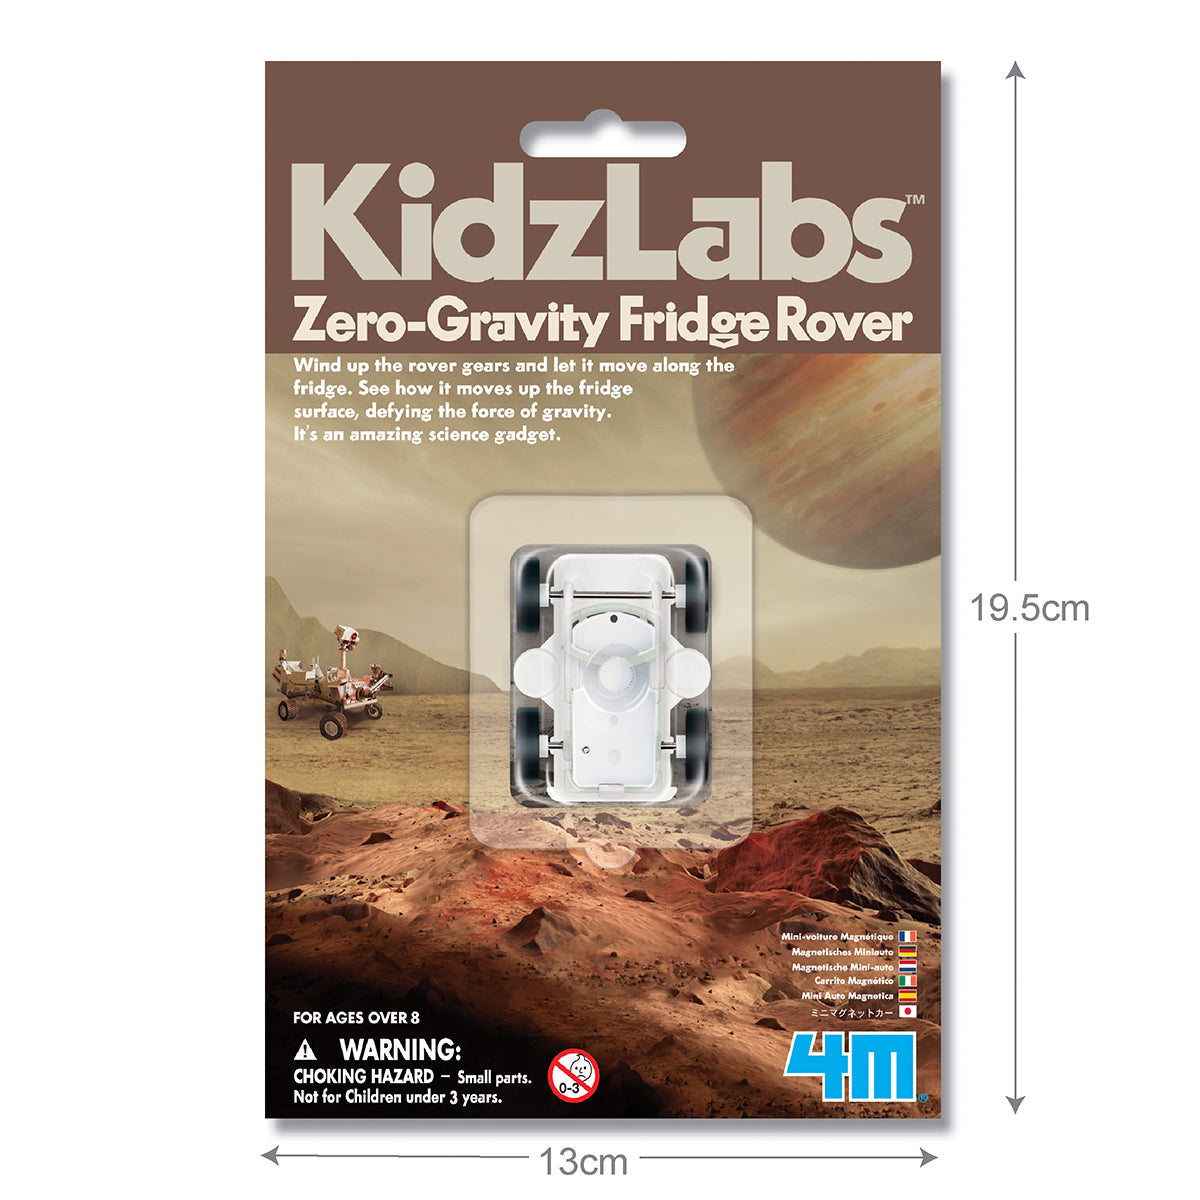 KidzLabs Zero Gravity Fridge Rover